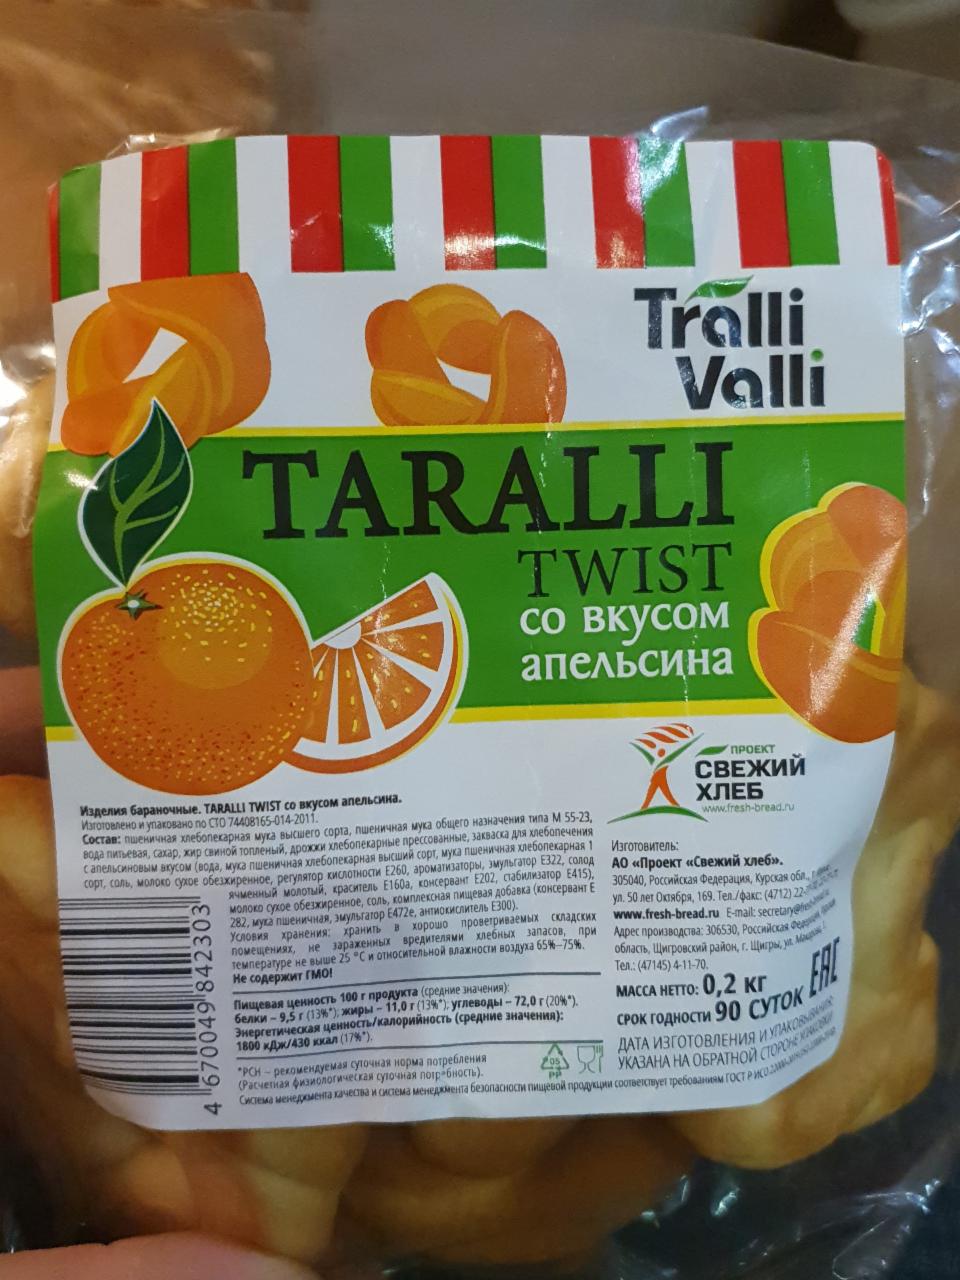 Фото - Taralli twist со вкусом апельсина Tralli Valli